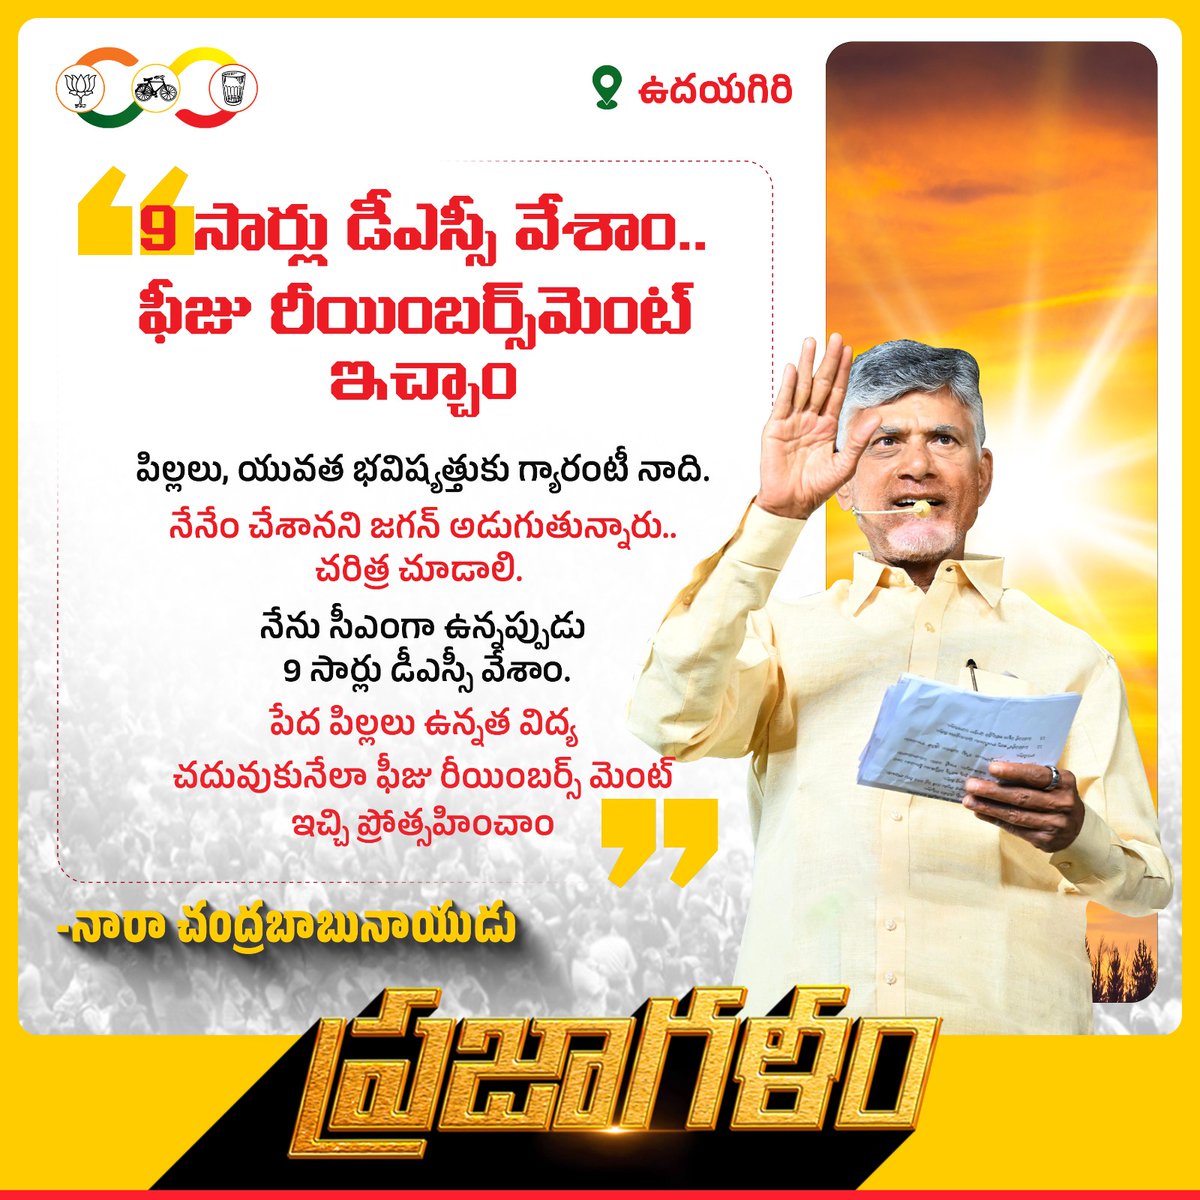 Together with Telugu Desam Janasena BJP started Praja Bala for the people of Andhra
Pradesh state. #BabuForJanaRajyam